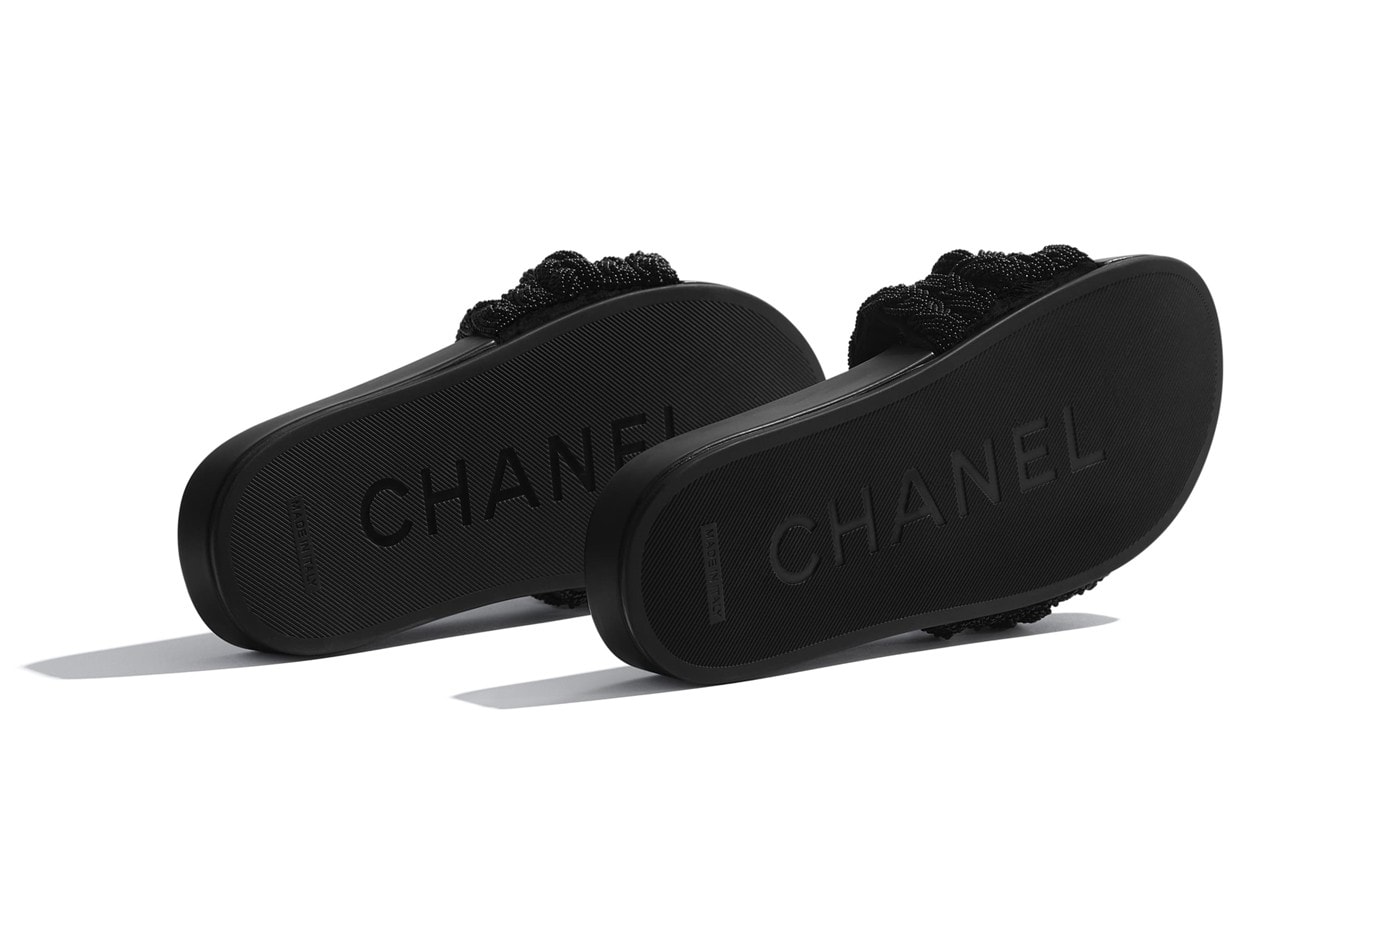 Chanel 推出要價 $1,100 美元奢華珍珠羊皮拖鞋